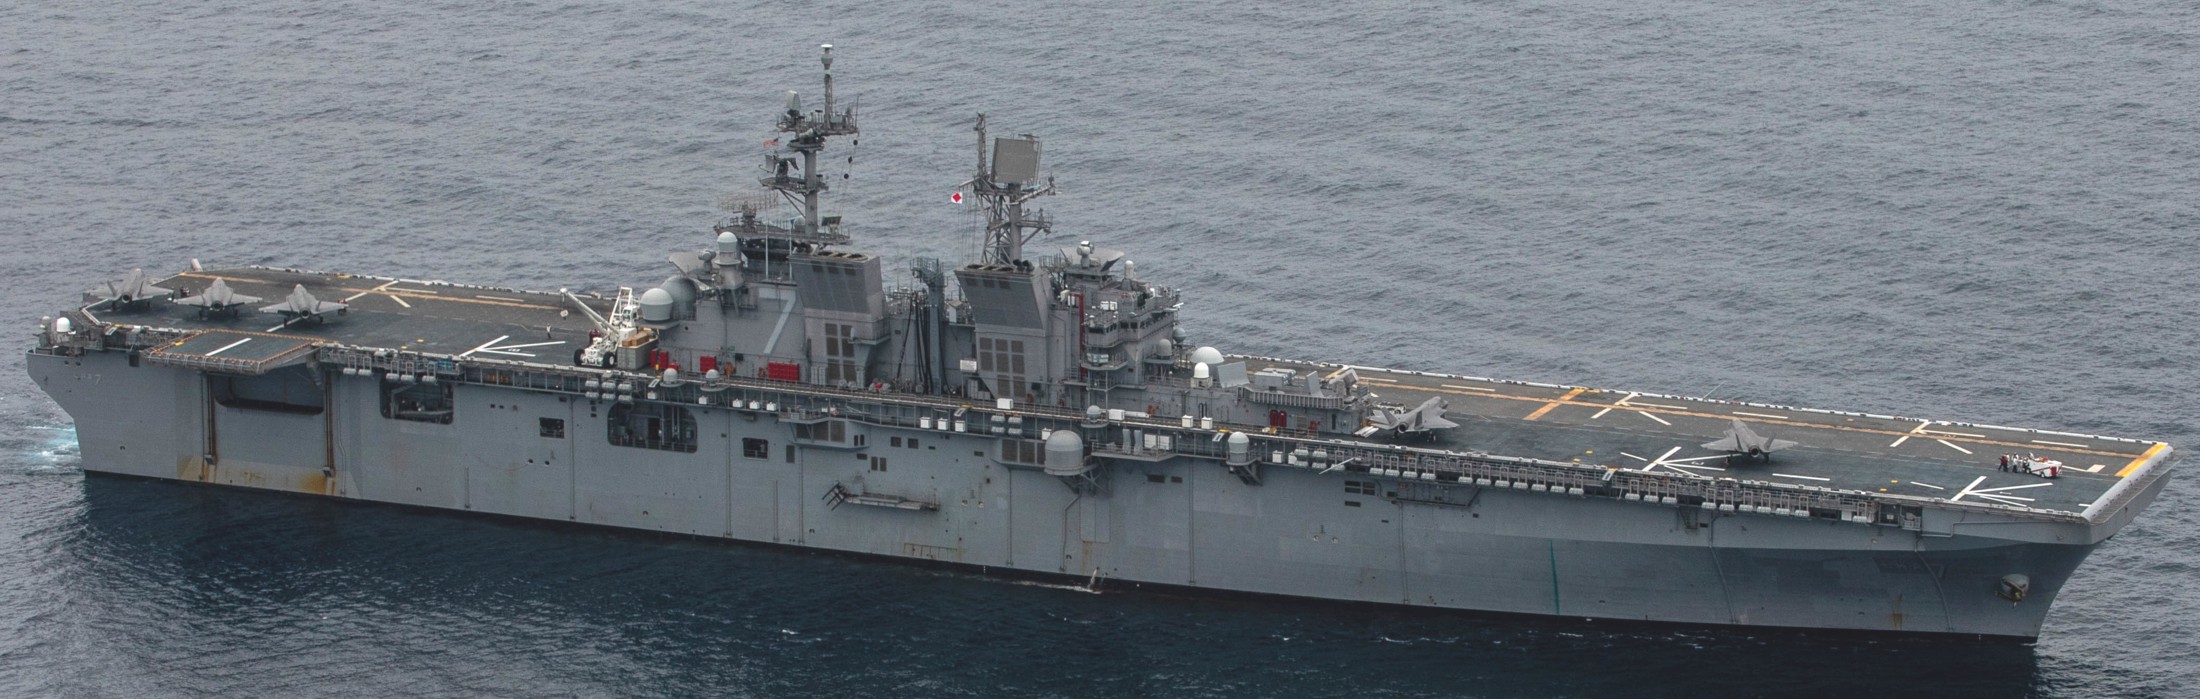 lha-7 uss tripoli america class amphibious assault ship landing us navy f-35b lightning ii 50